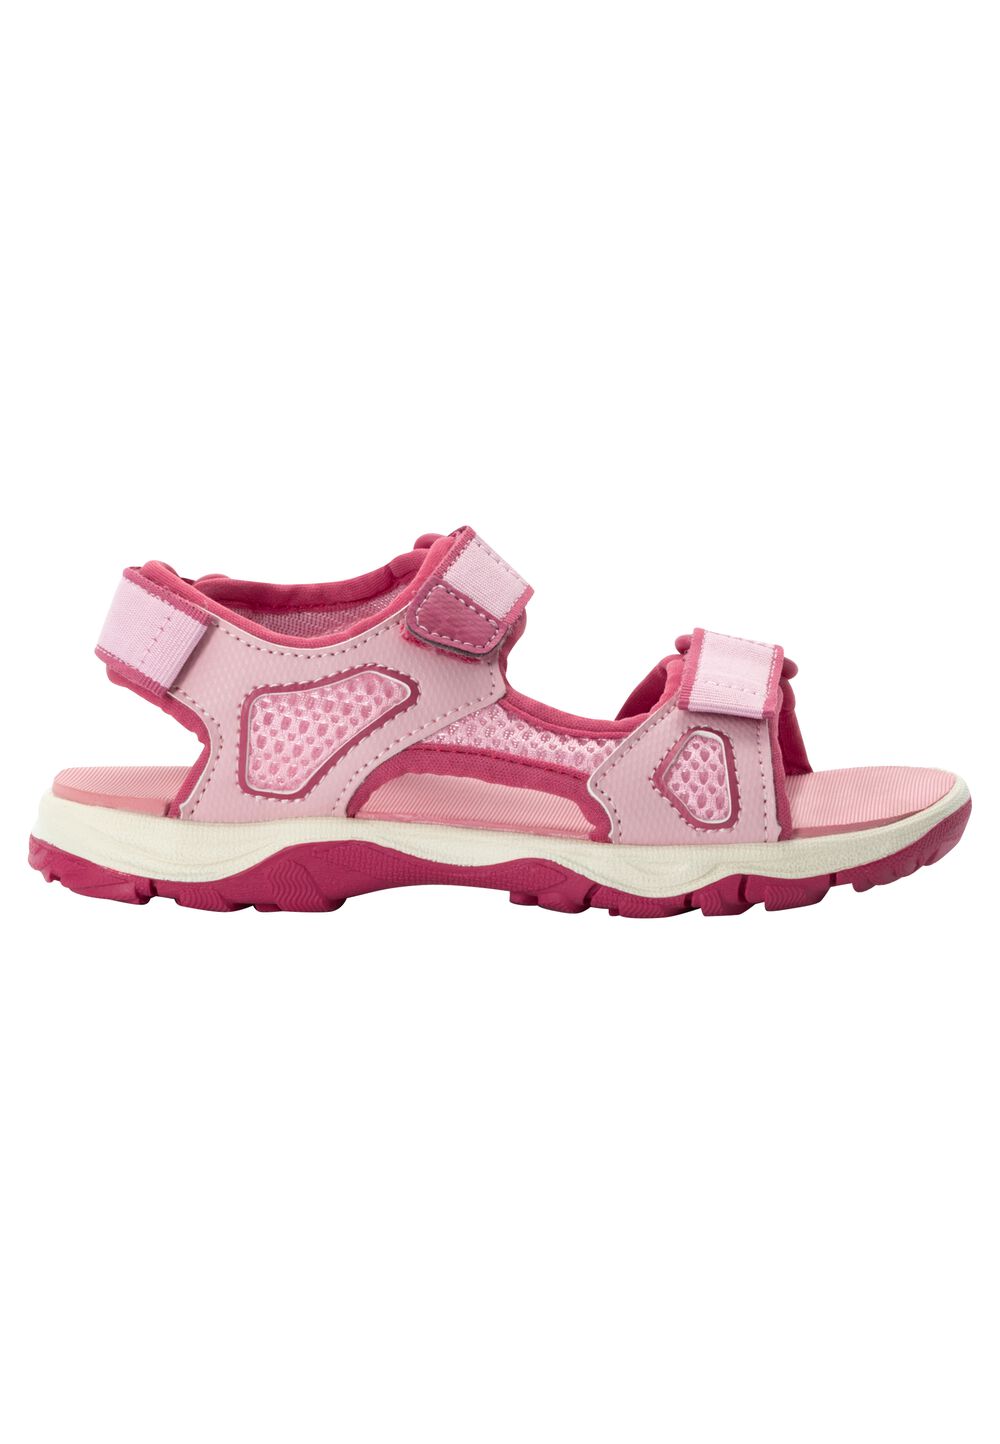 Jack Wolfskin Taraco Beach Sandal Kids Kinderen sandalen 31 soft pink soft pink